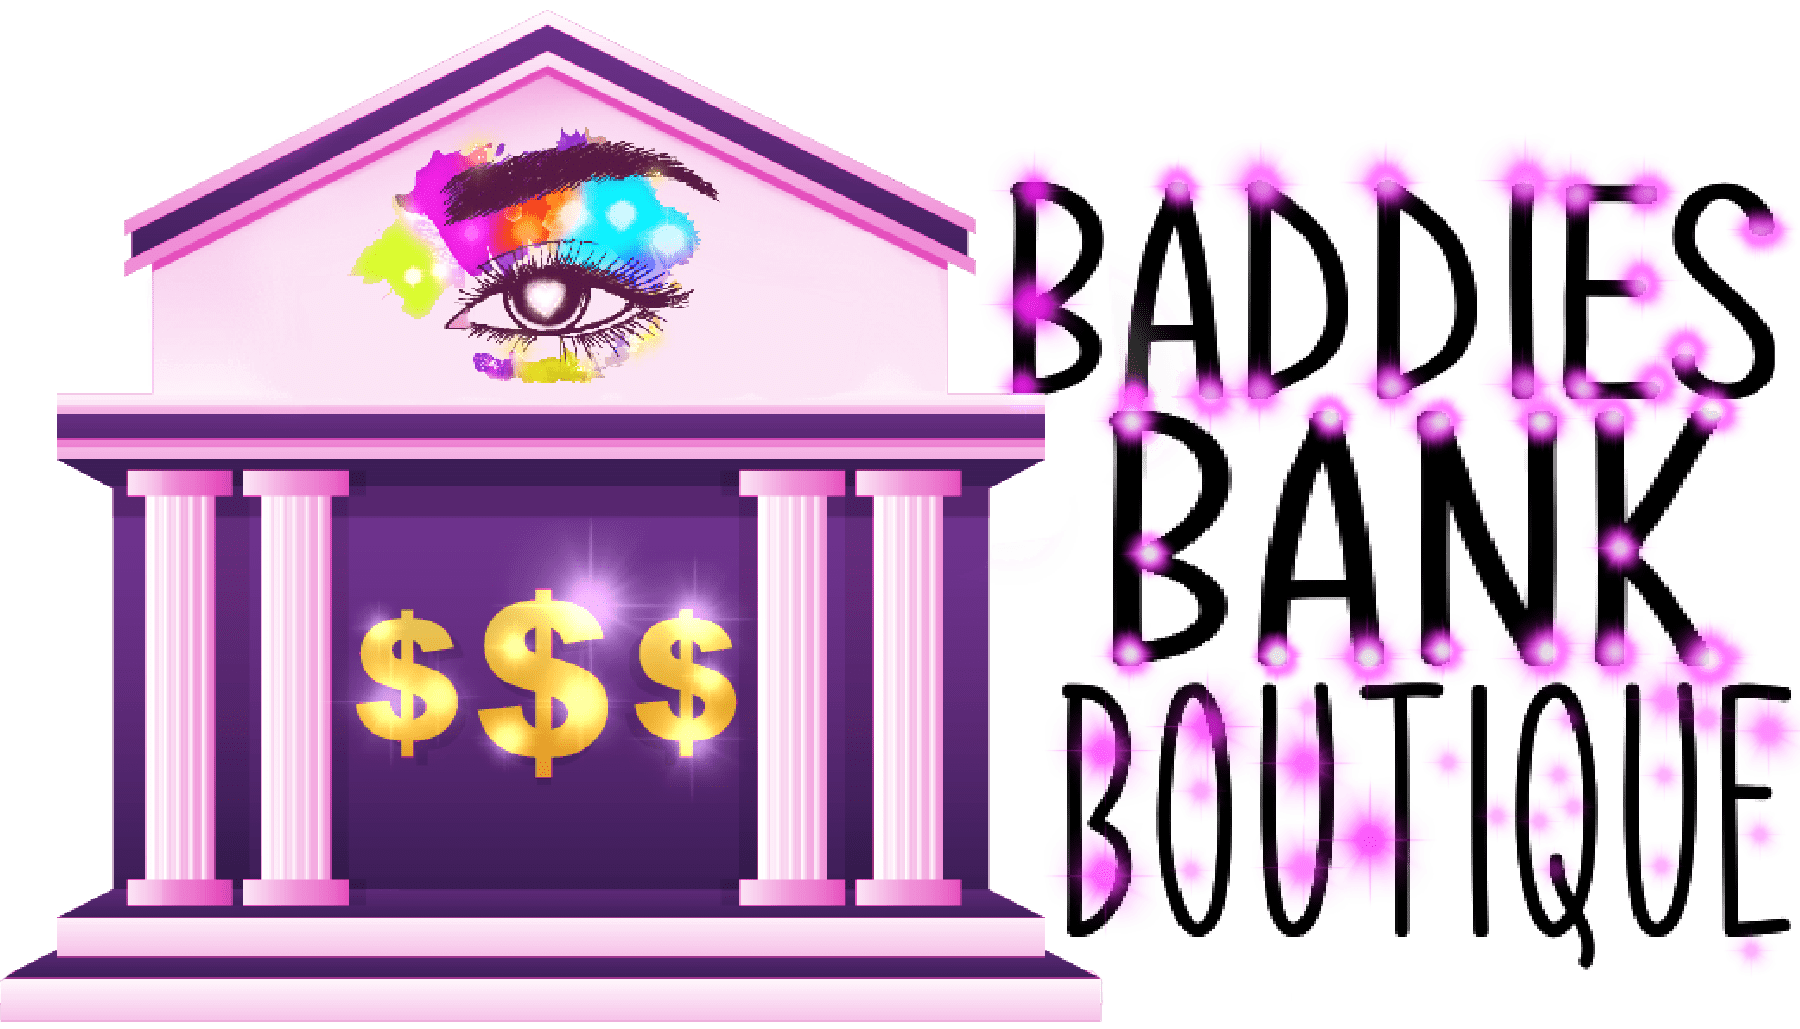 Baddies Bank Boutique